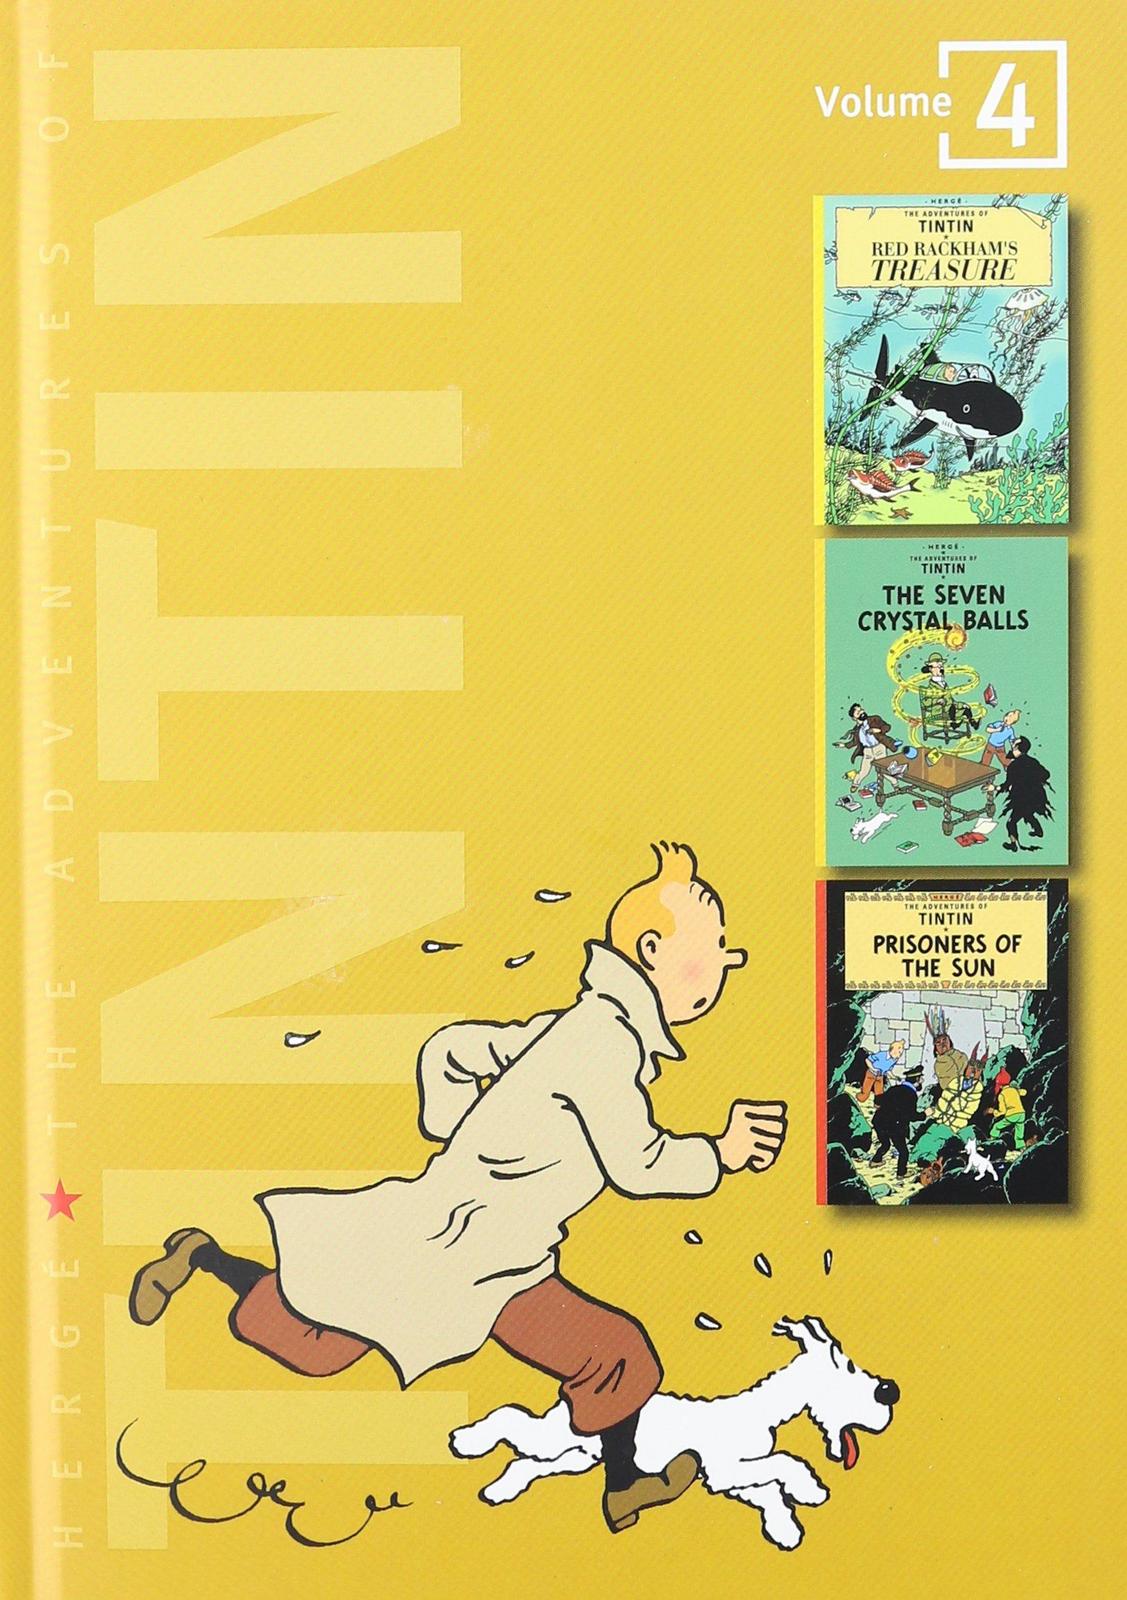 Hergé: The adventures of Tintin (1900)